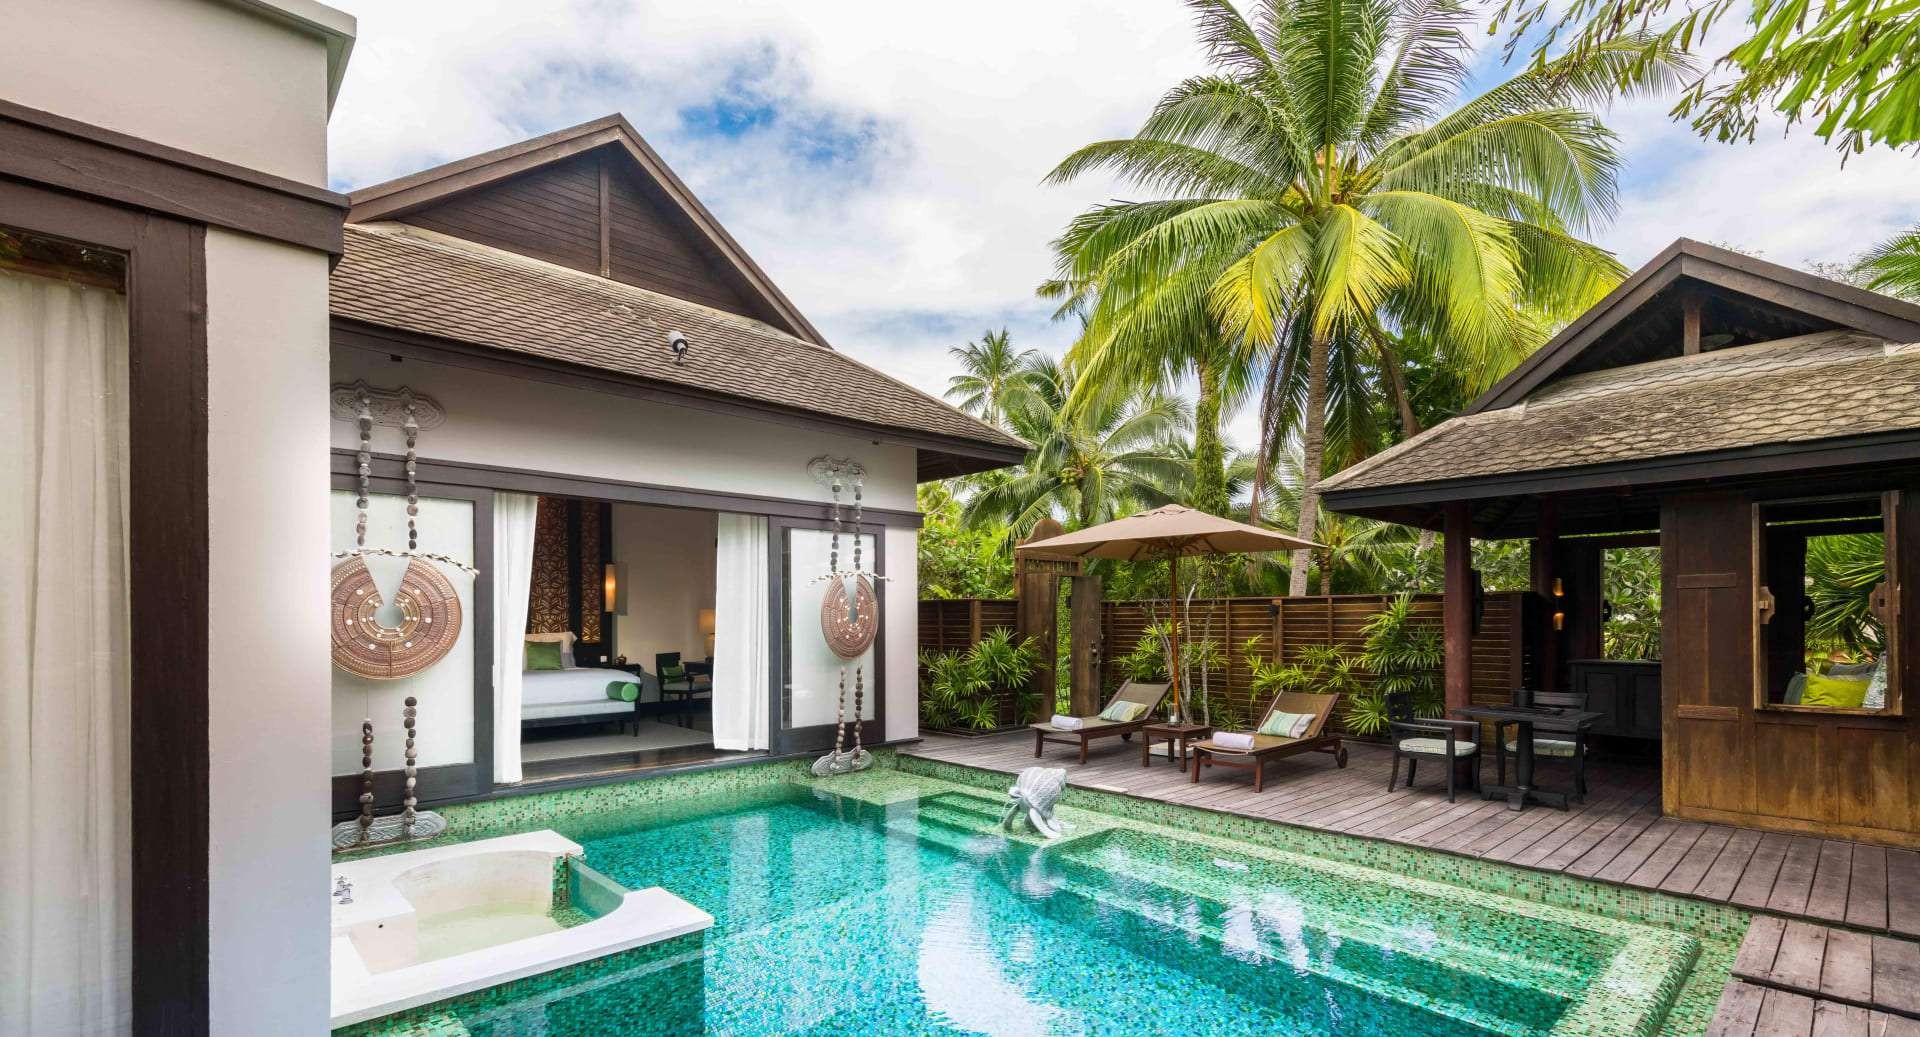 Pool Villa, Anantara Phuket Mai Khao villas 5*